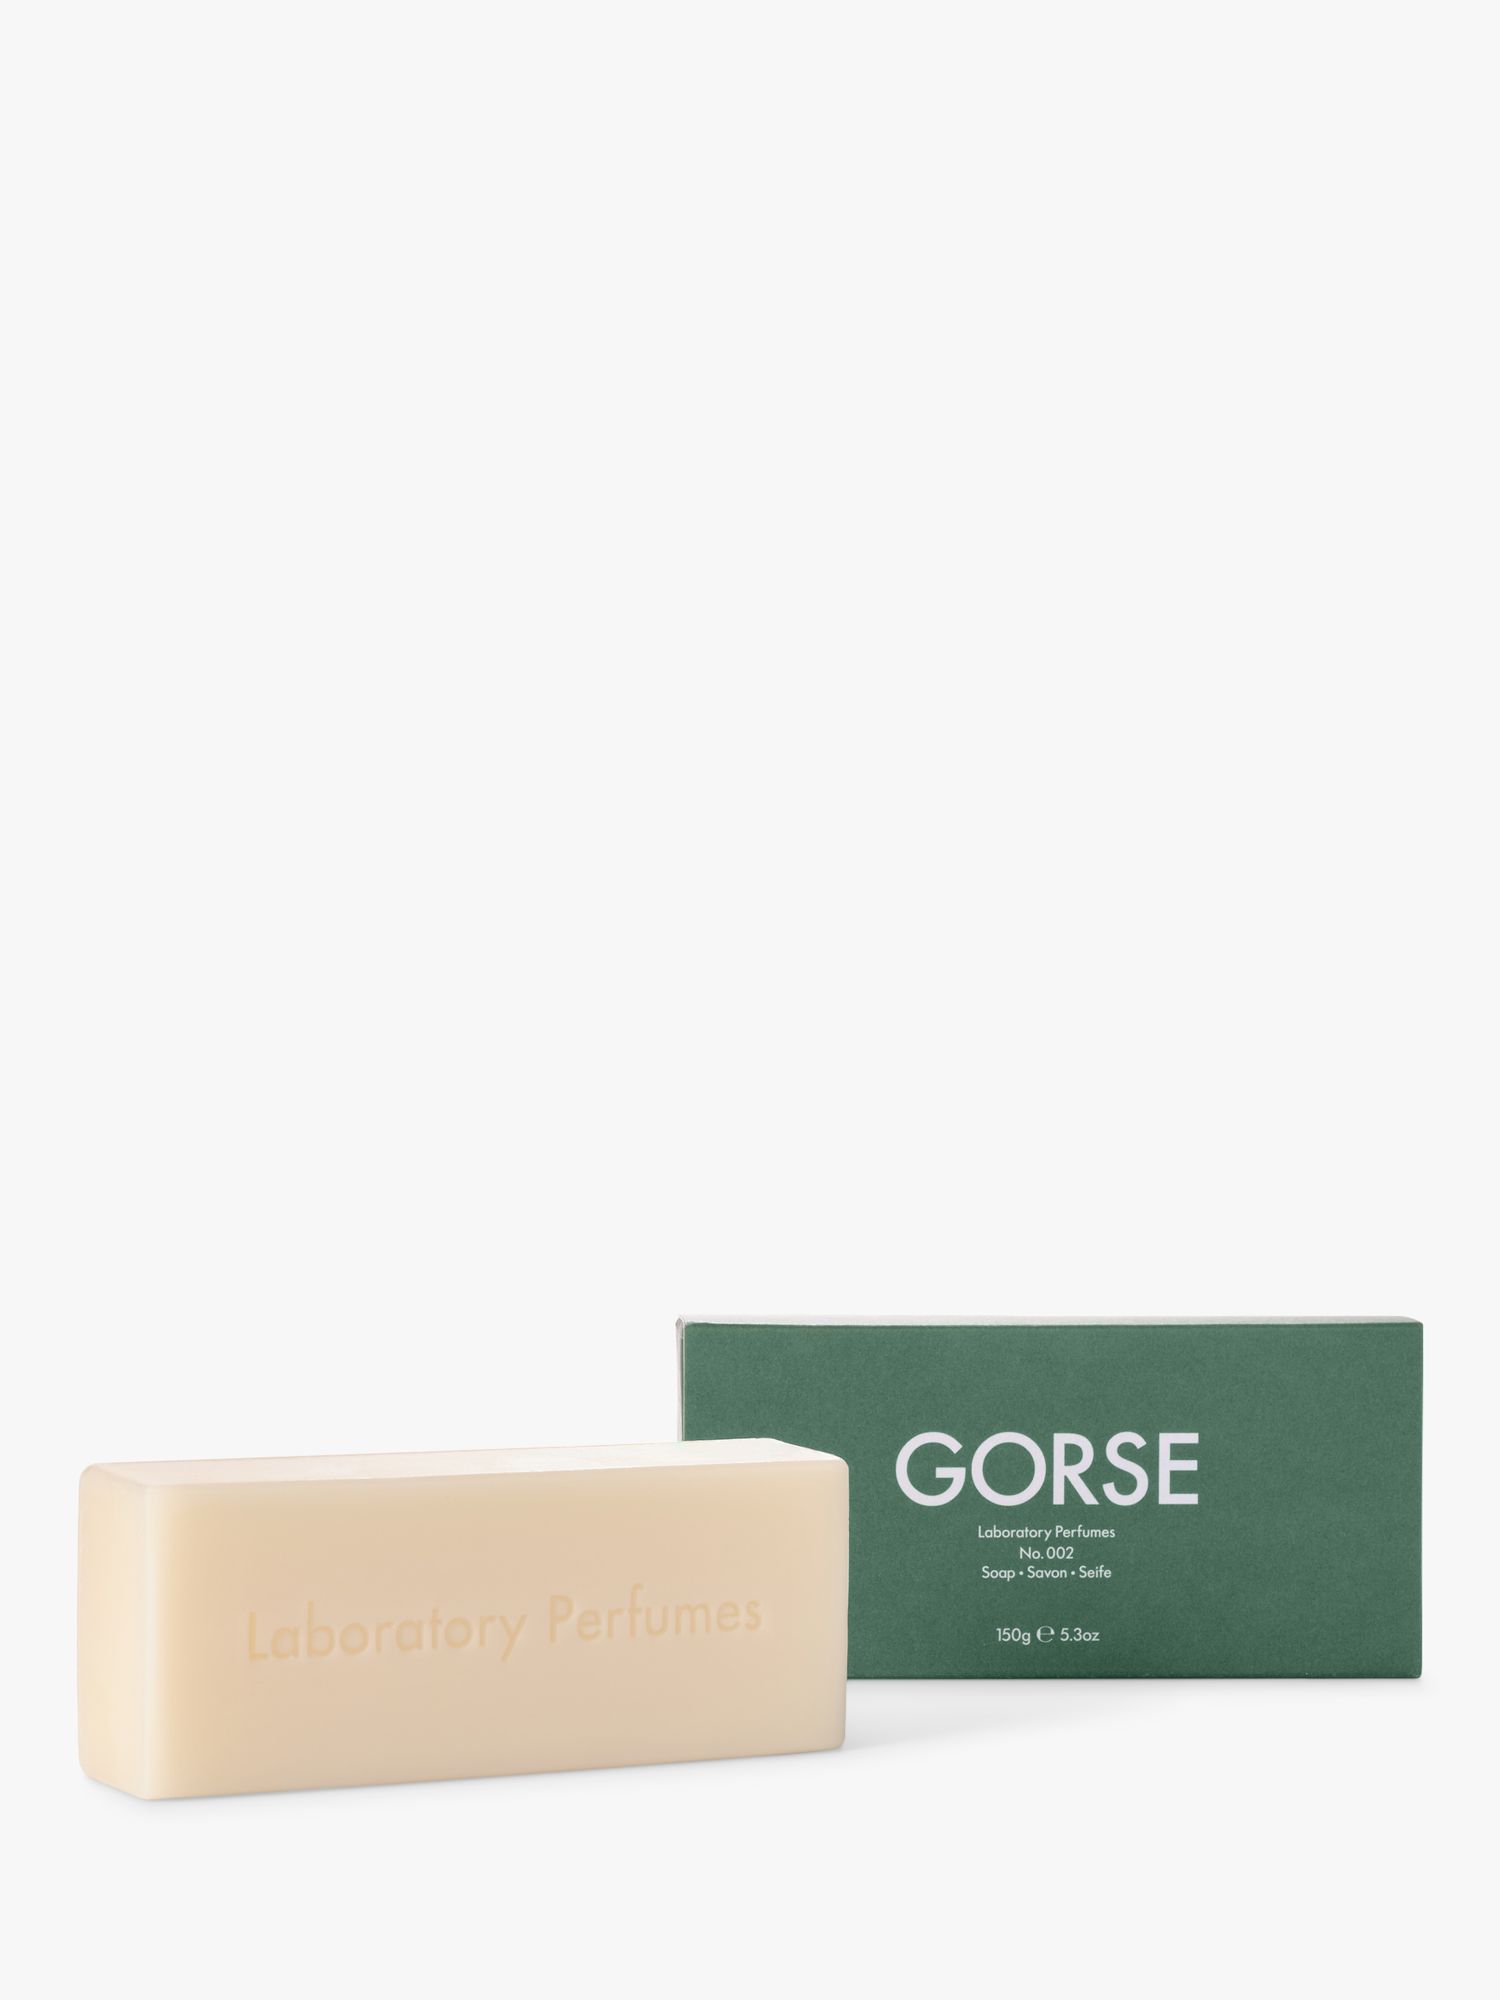 Laboratory Perfumes Gorse Soap, 150g 1